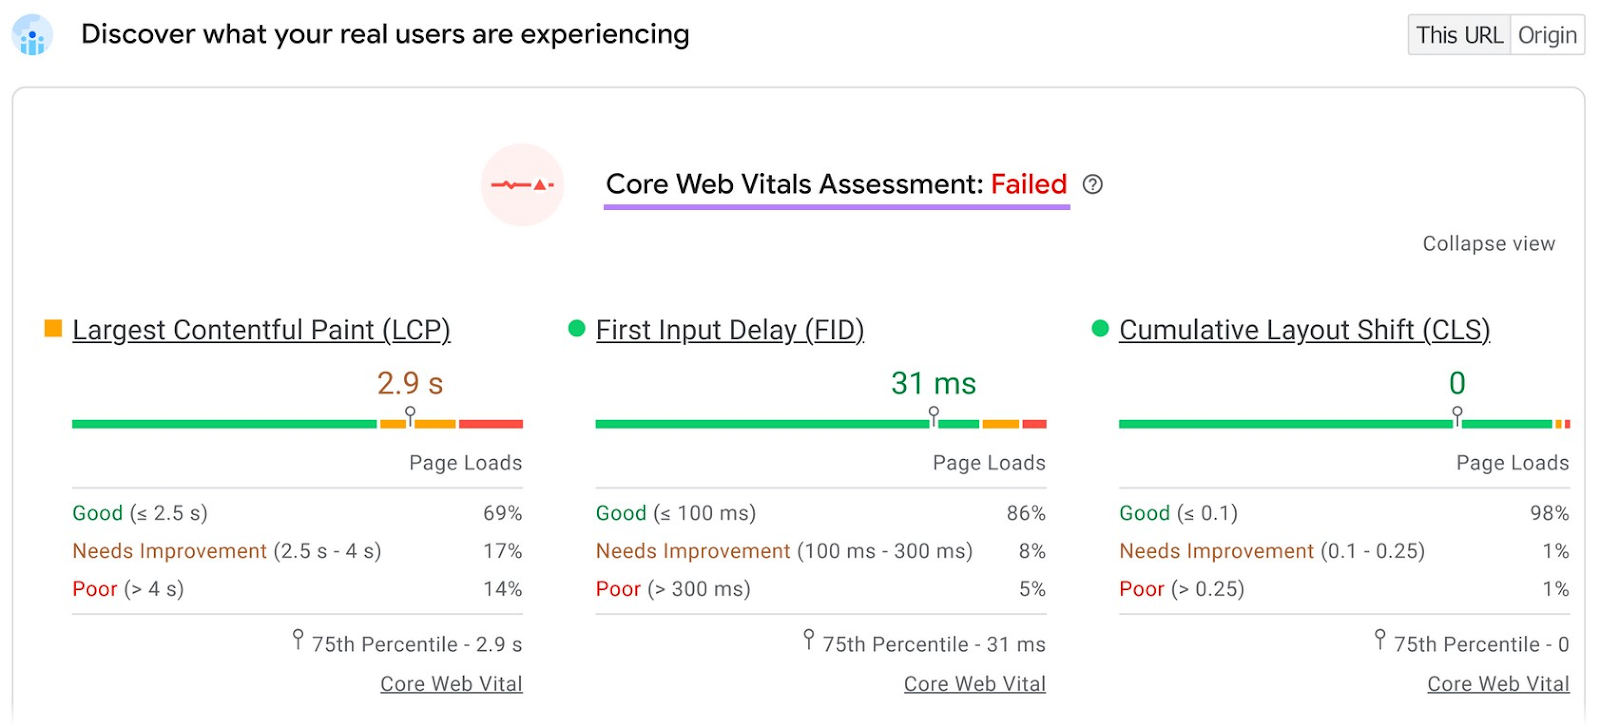 Core Web Vitals assessment: Failed